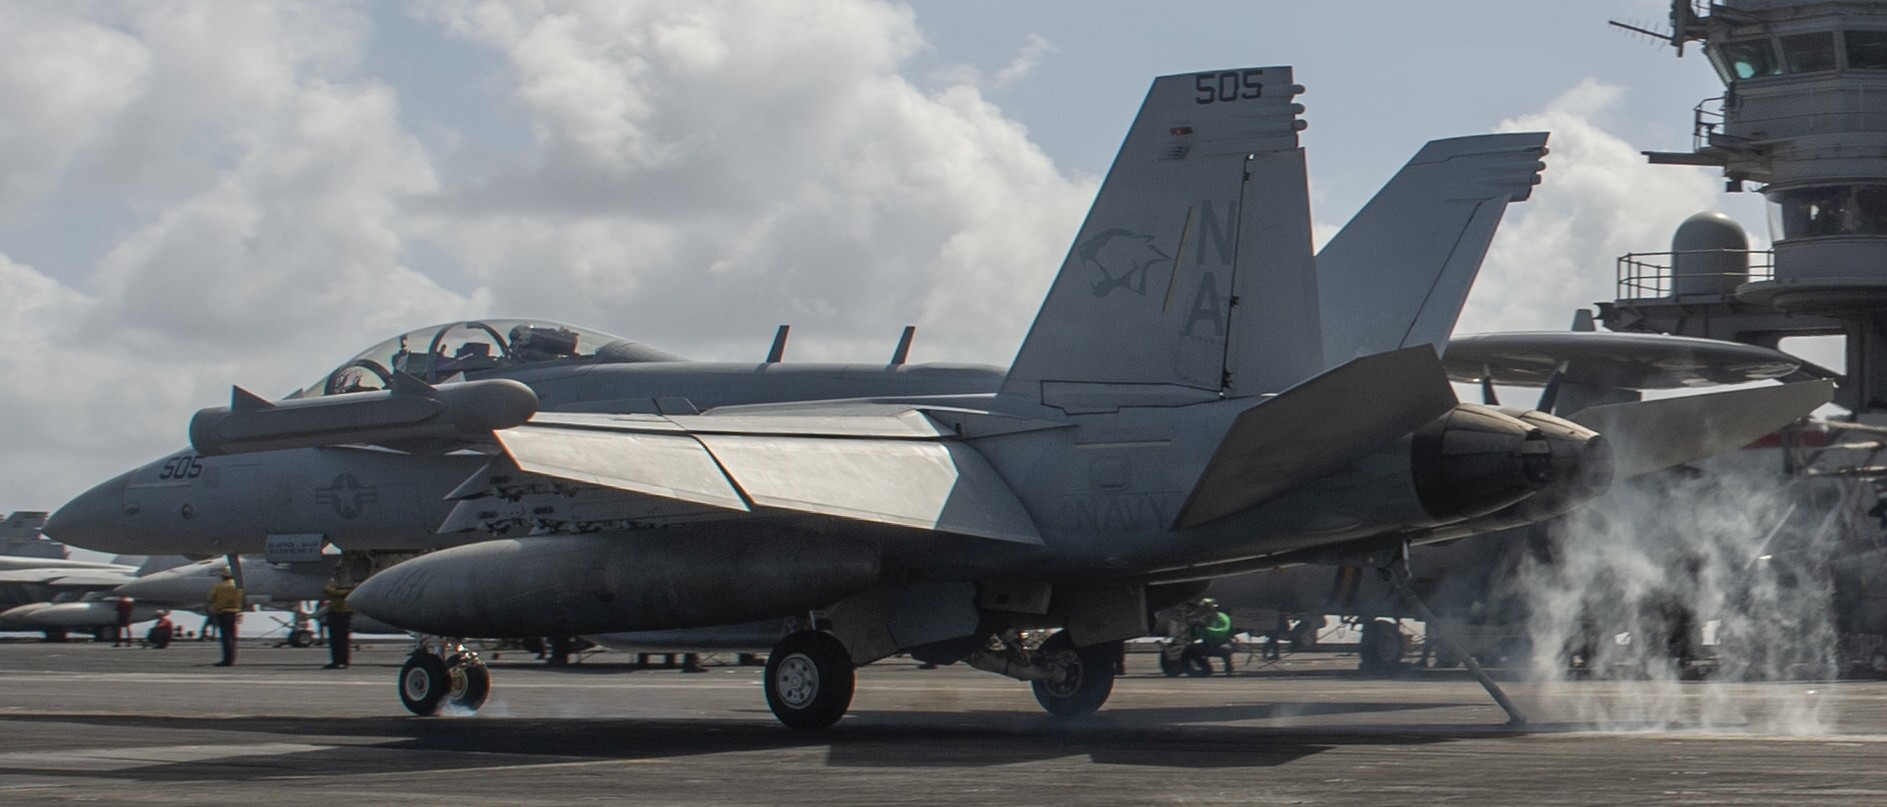 vaq-139 cougars electronic attack squadron us navy ea-18g growler cvw-17 uss nimitz cvn-68 138